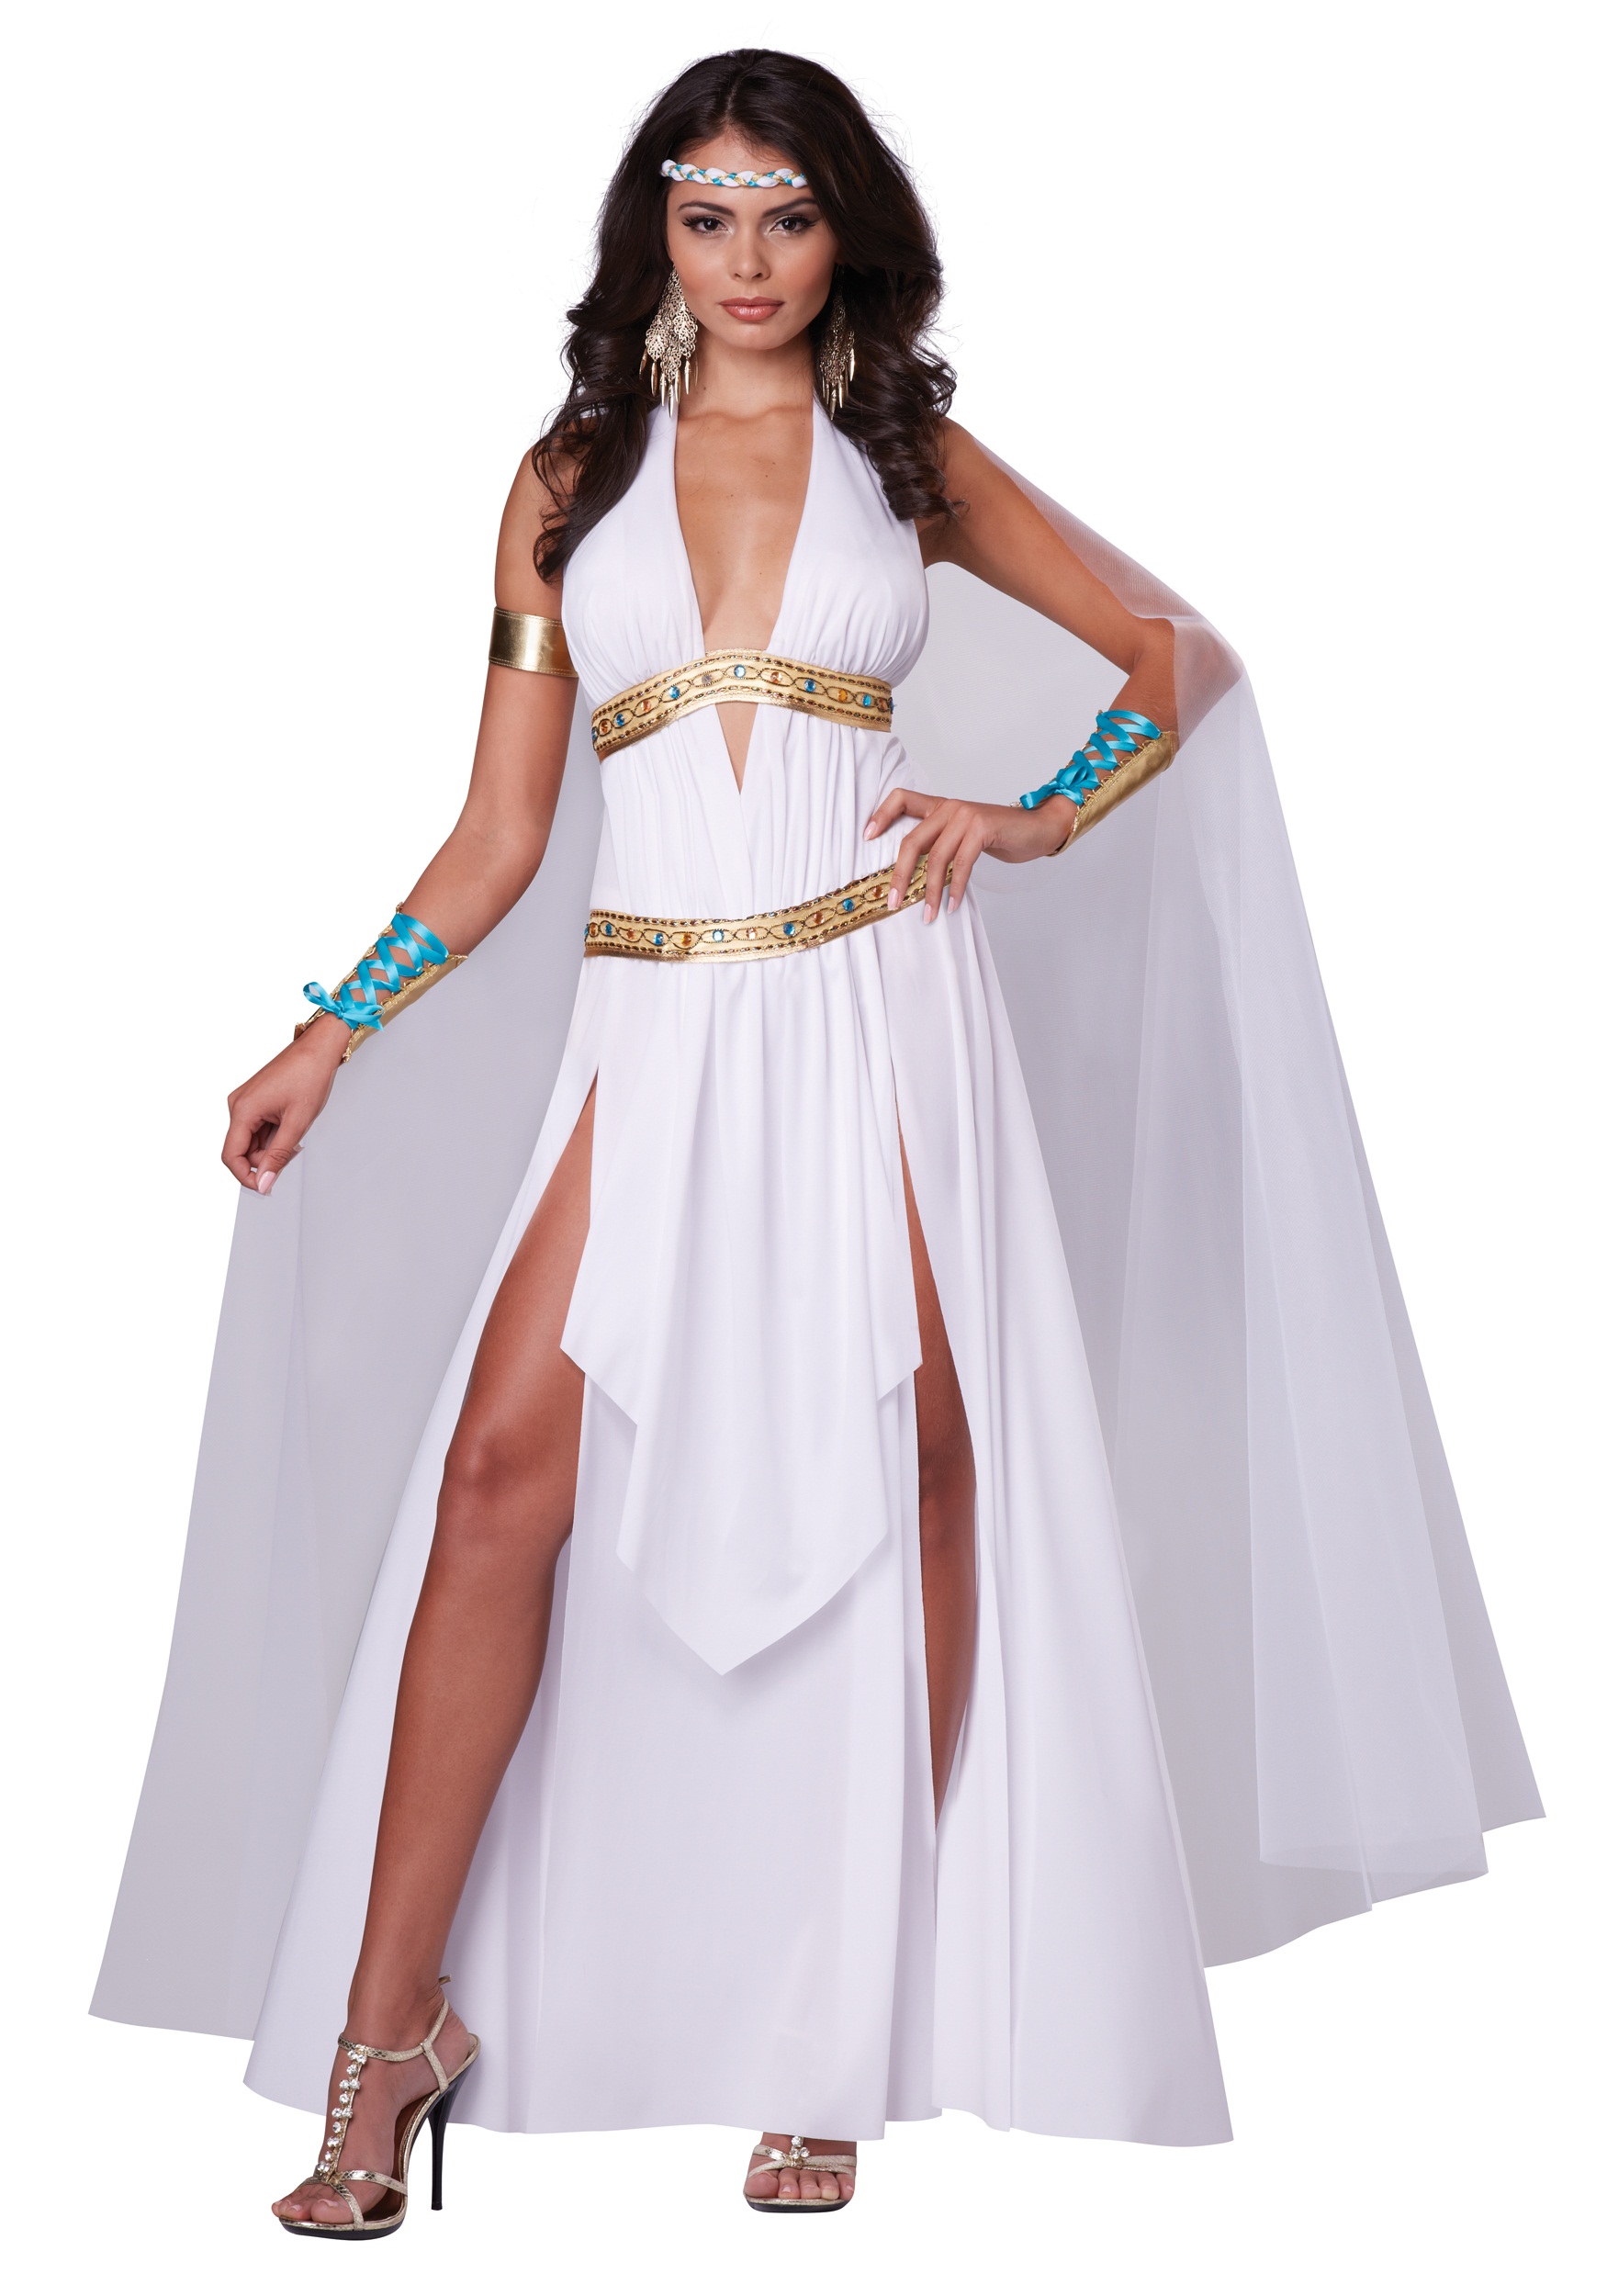 Photos - Fancy Dress California Costume Collection Women's Glorious Goddess Costume White CA013 